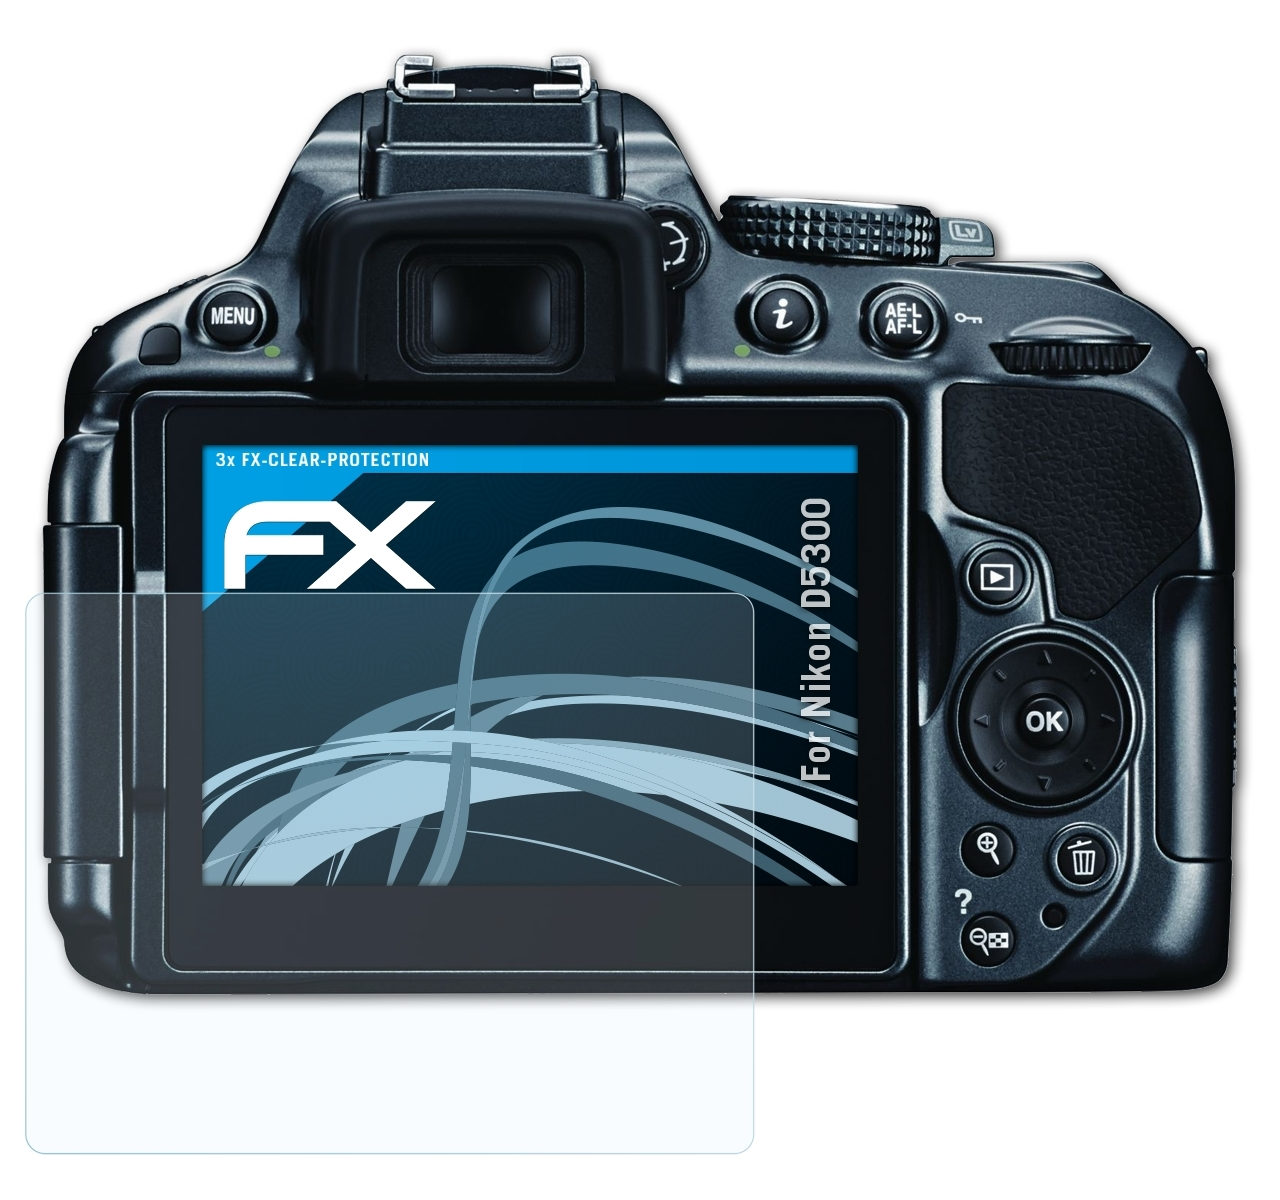 3x Nikon ATFOLIX Displayschutz(für FX-Clear D5300)